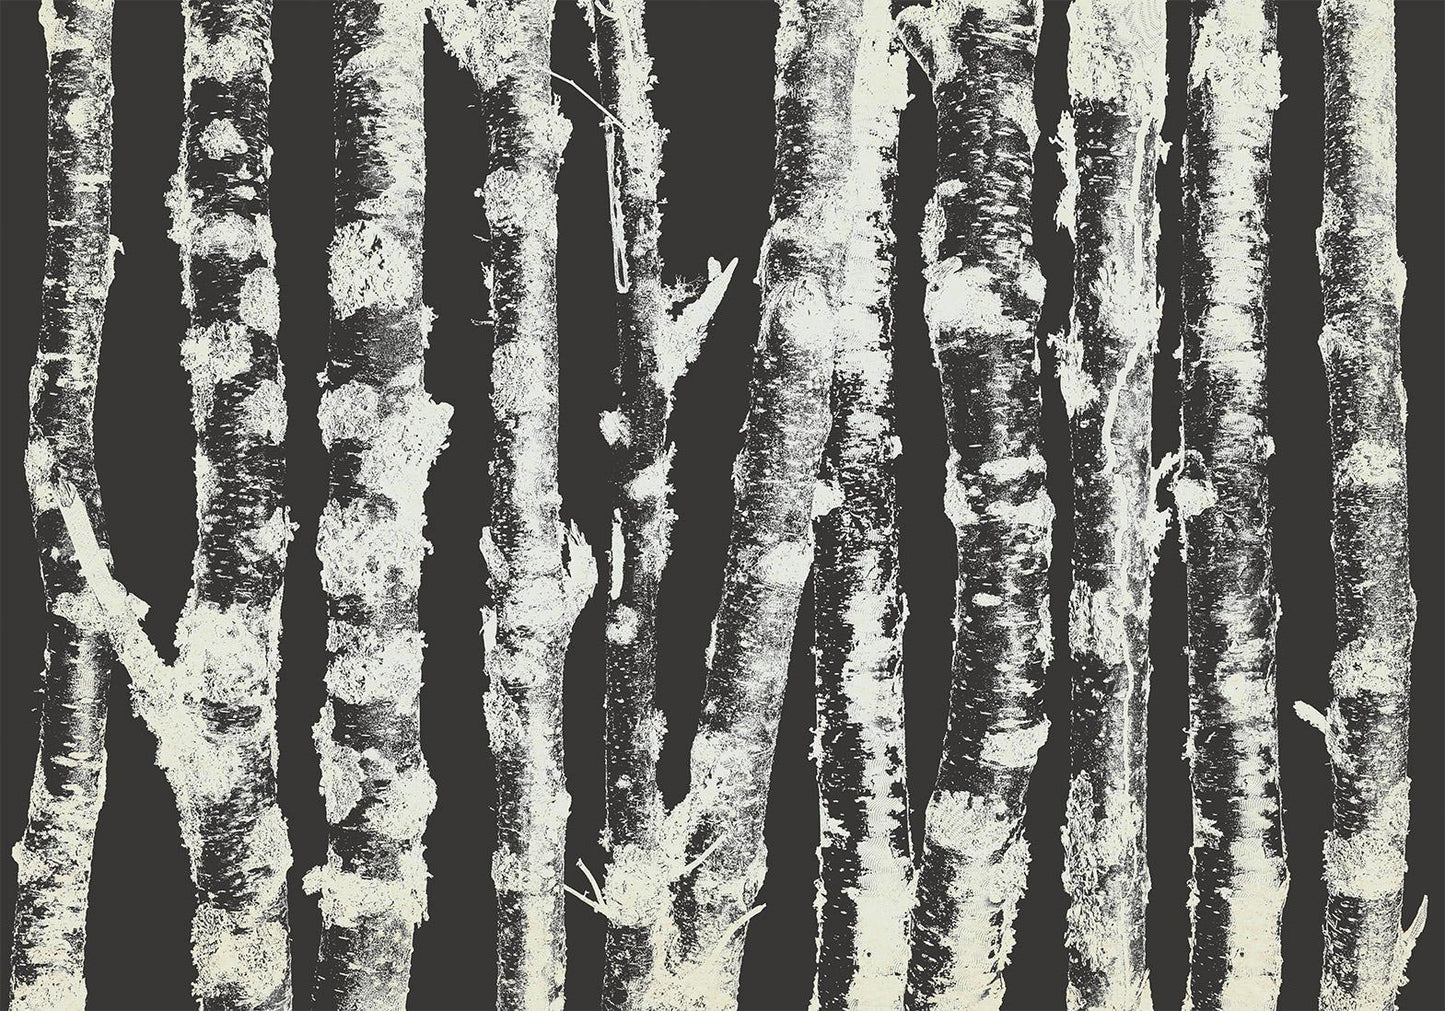 Fotobehang - Stately Birches - Second Variant